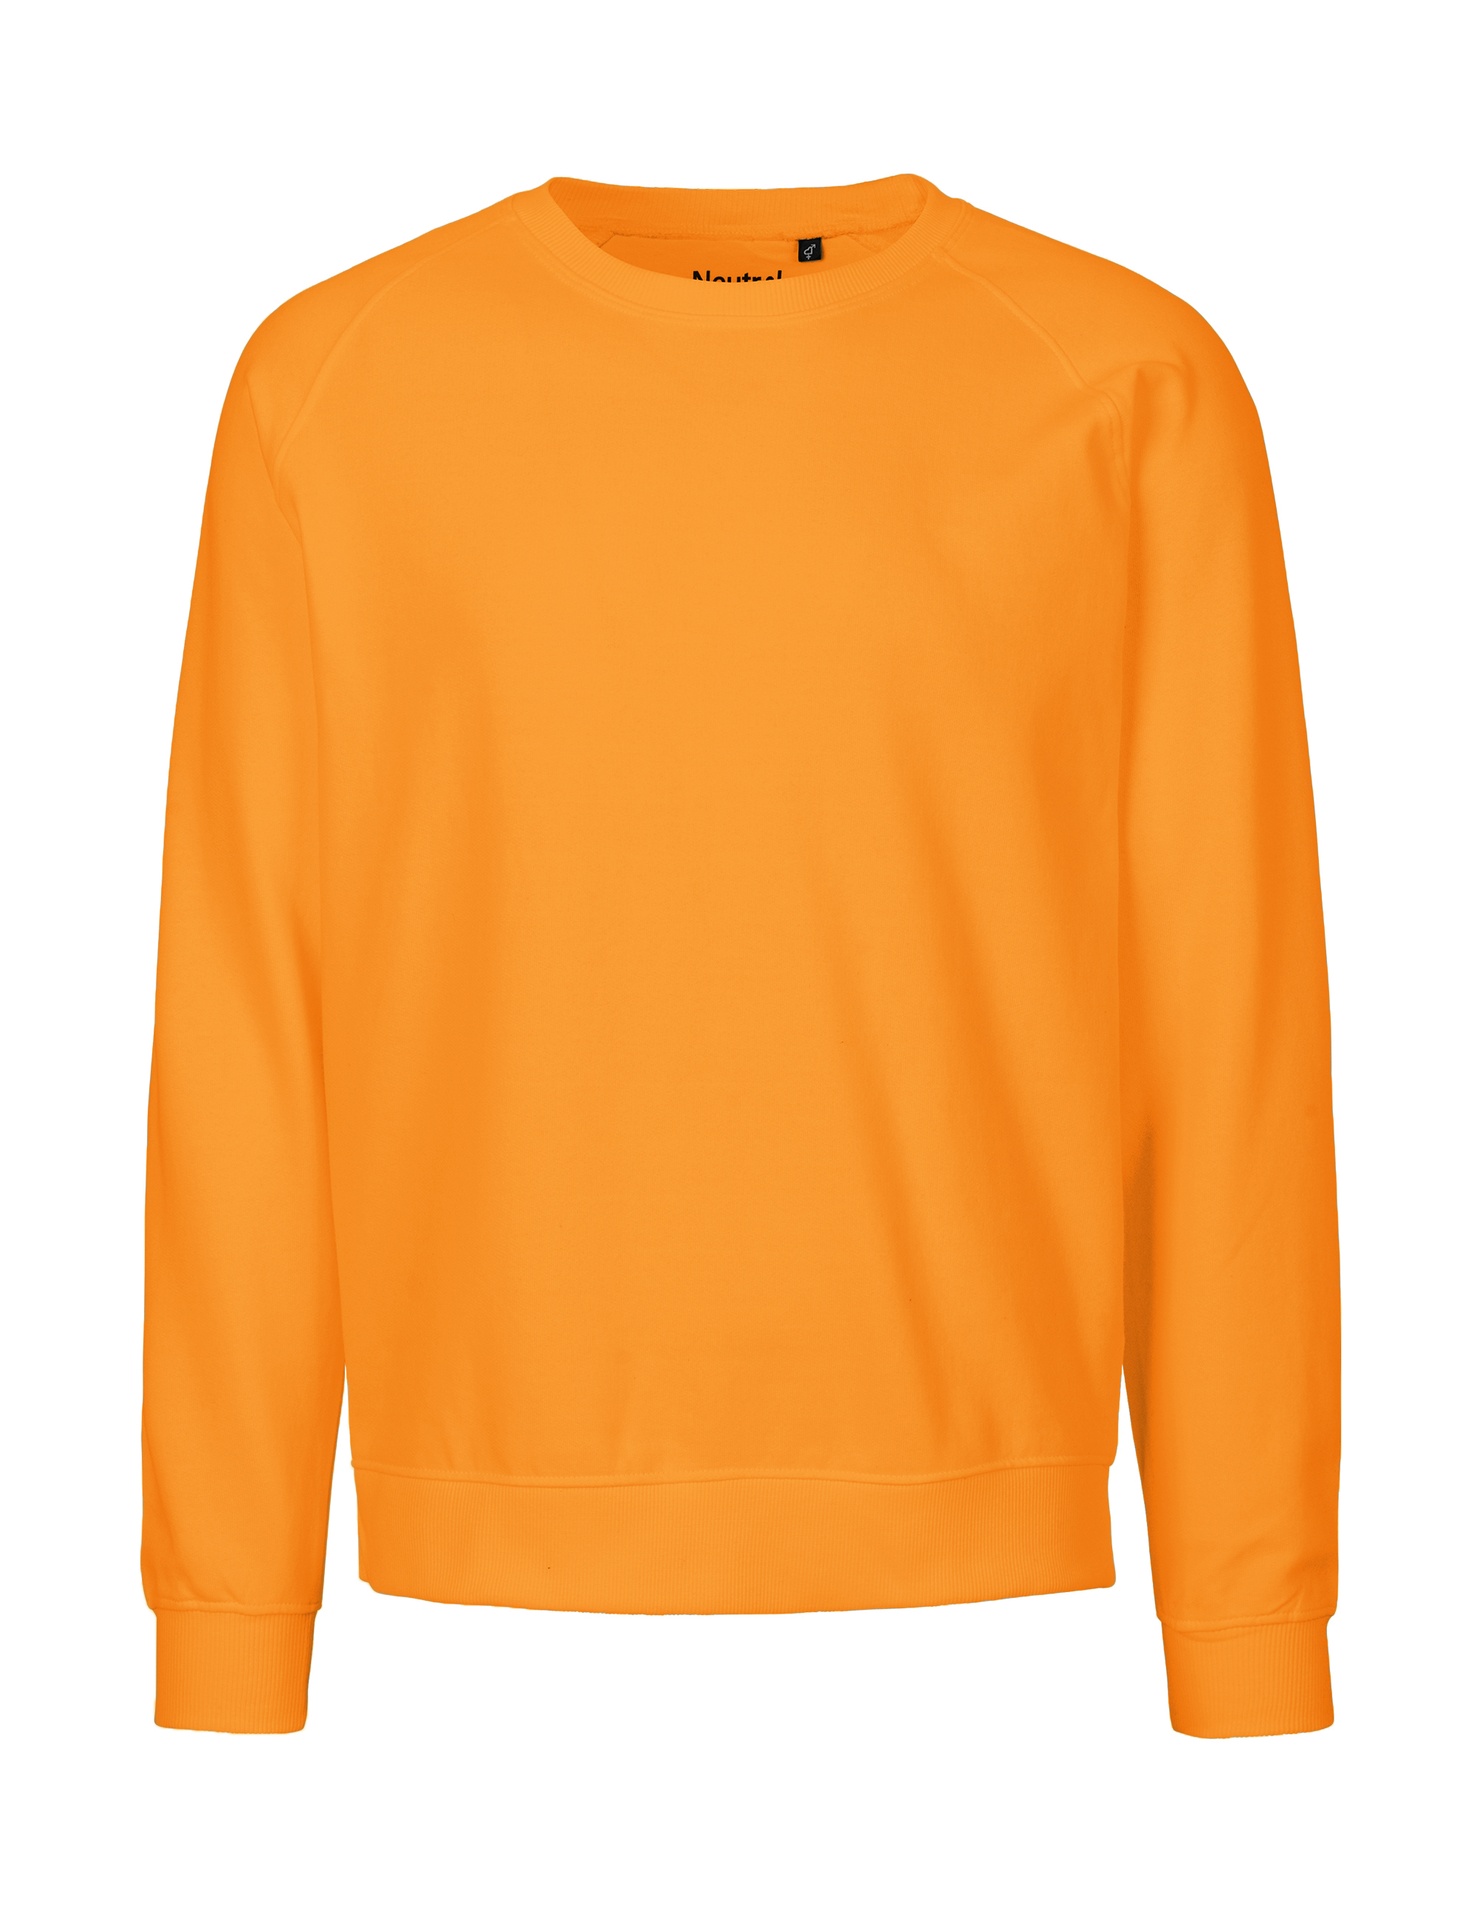 [PR/02791] Unisex Sweatshirt (Okay Orange 31, XL)